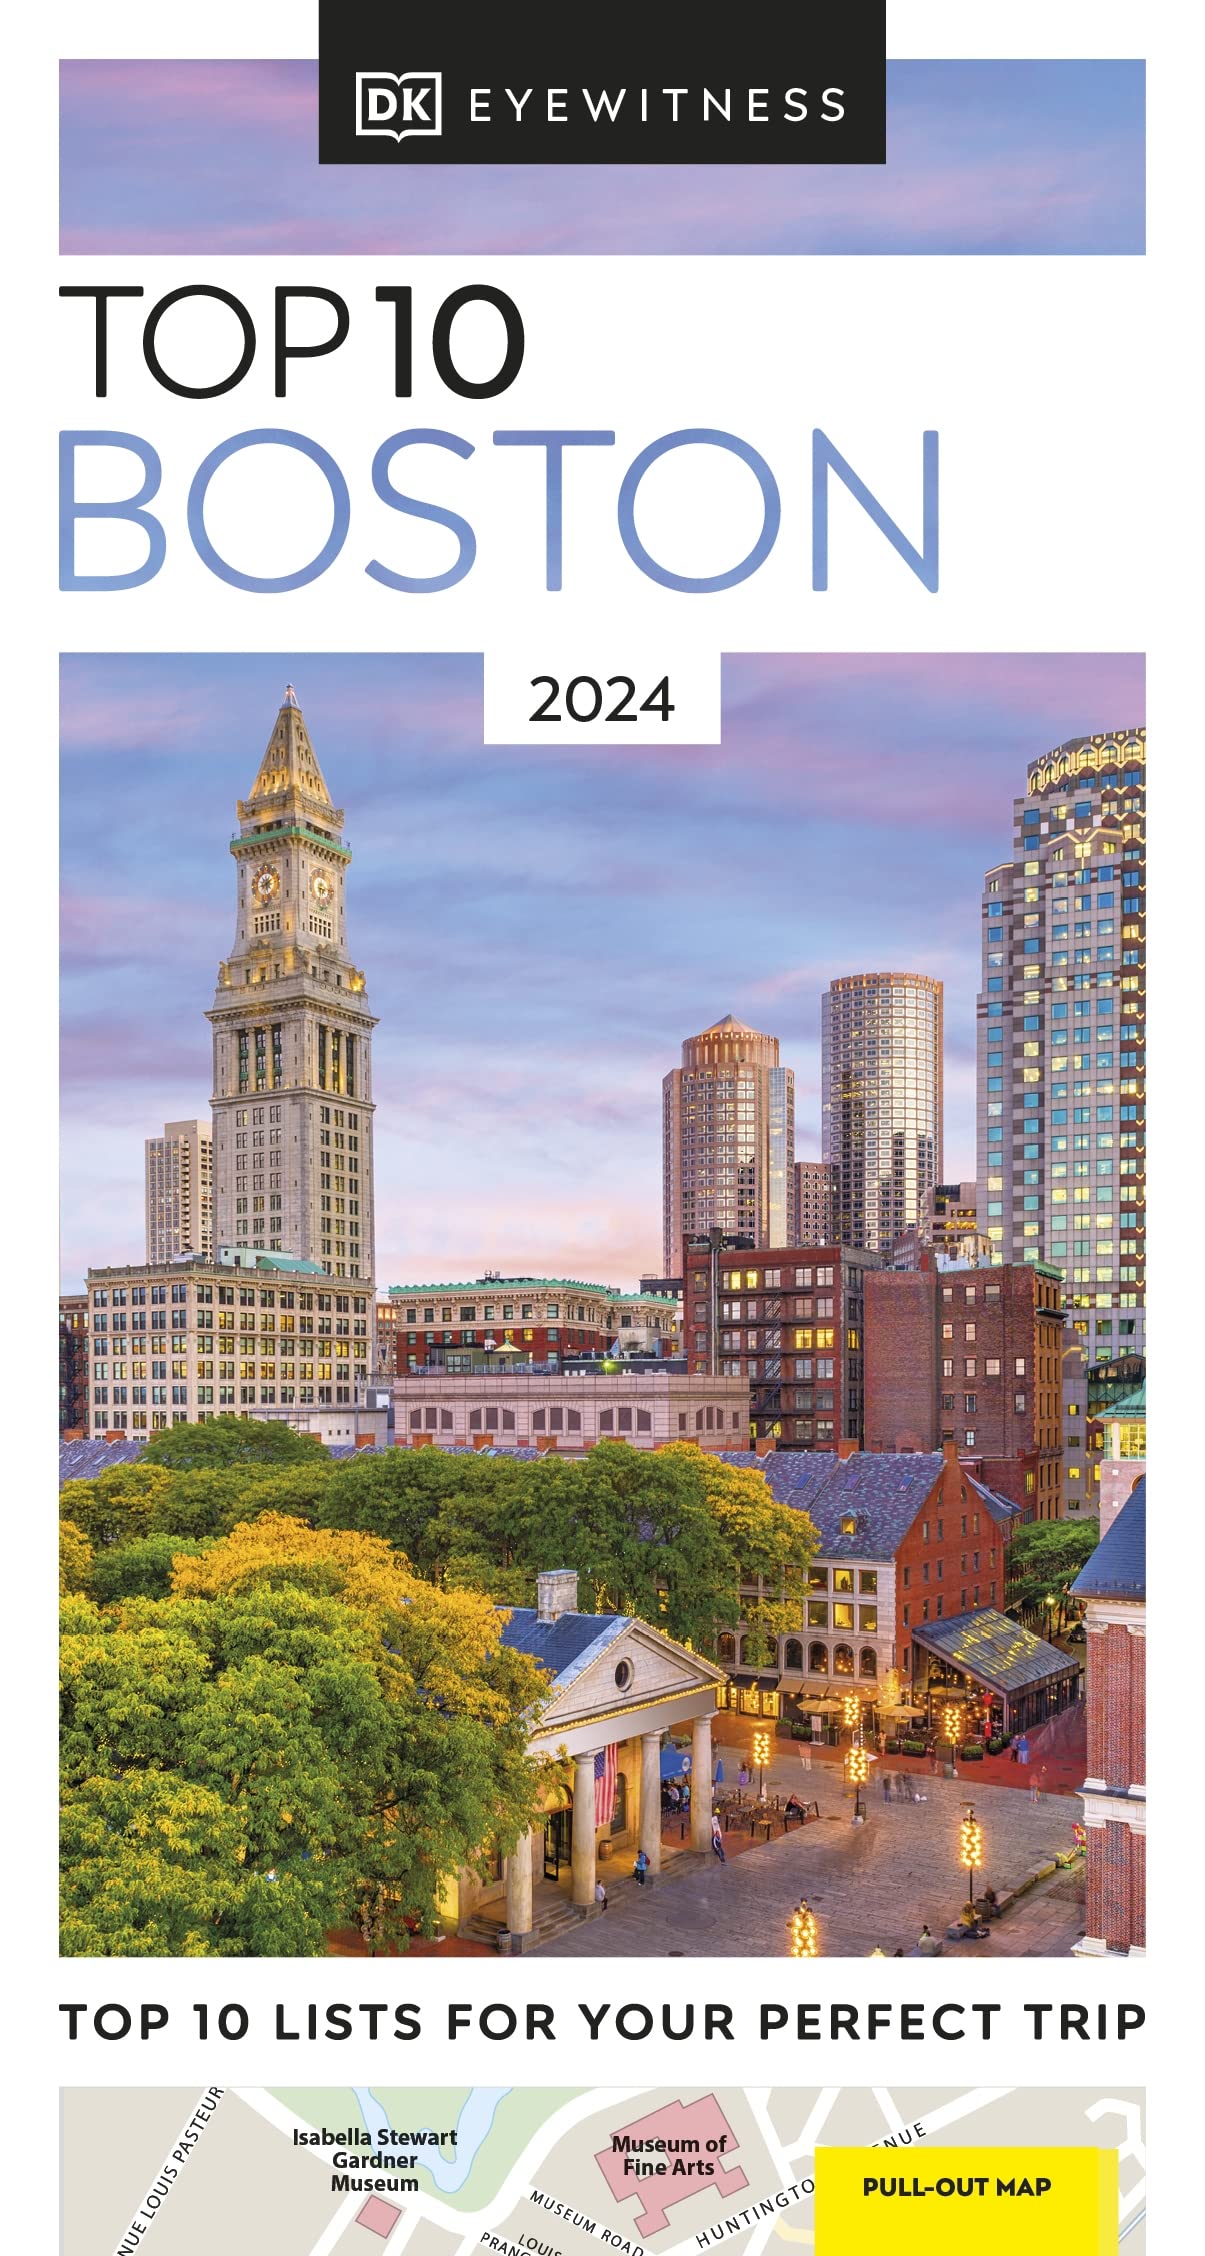 Online bestellen: Reisgids Eyewitness Top 10 Boston | Dorling Kindersley